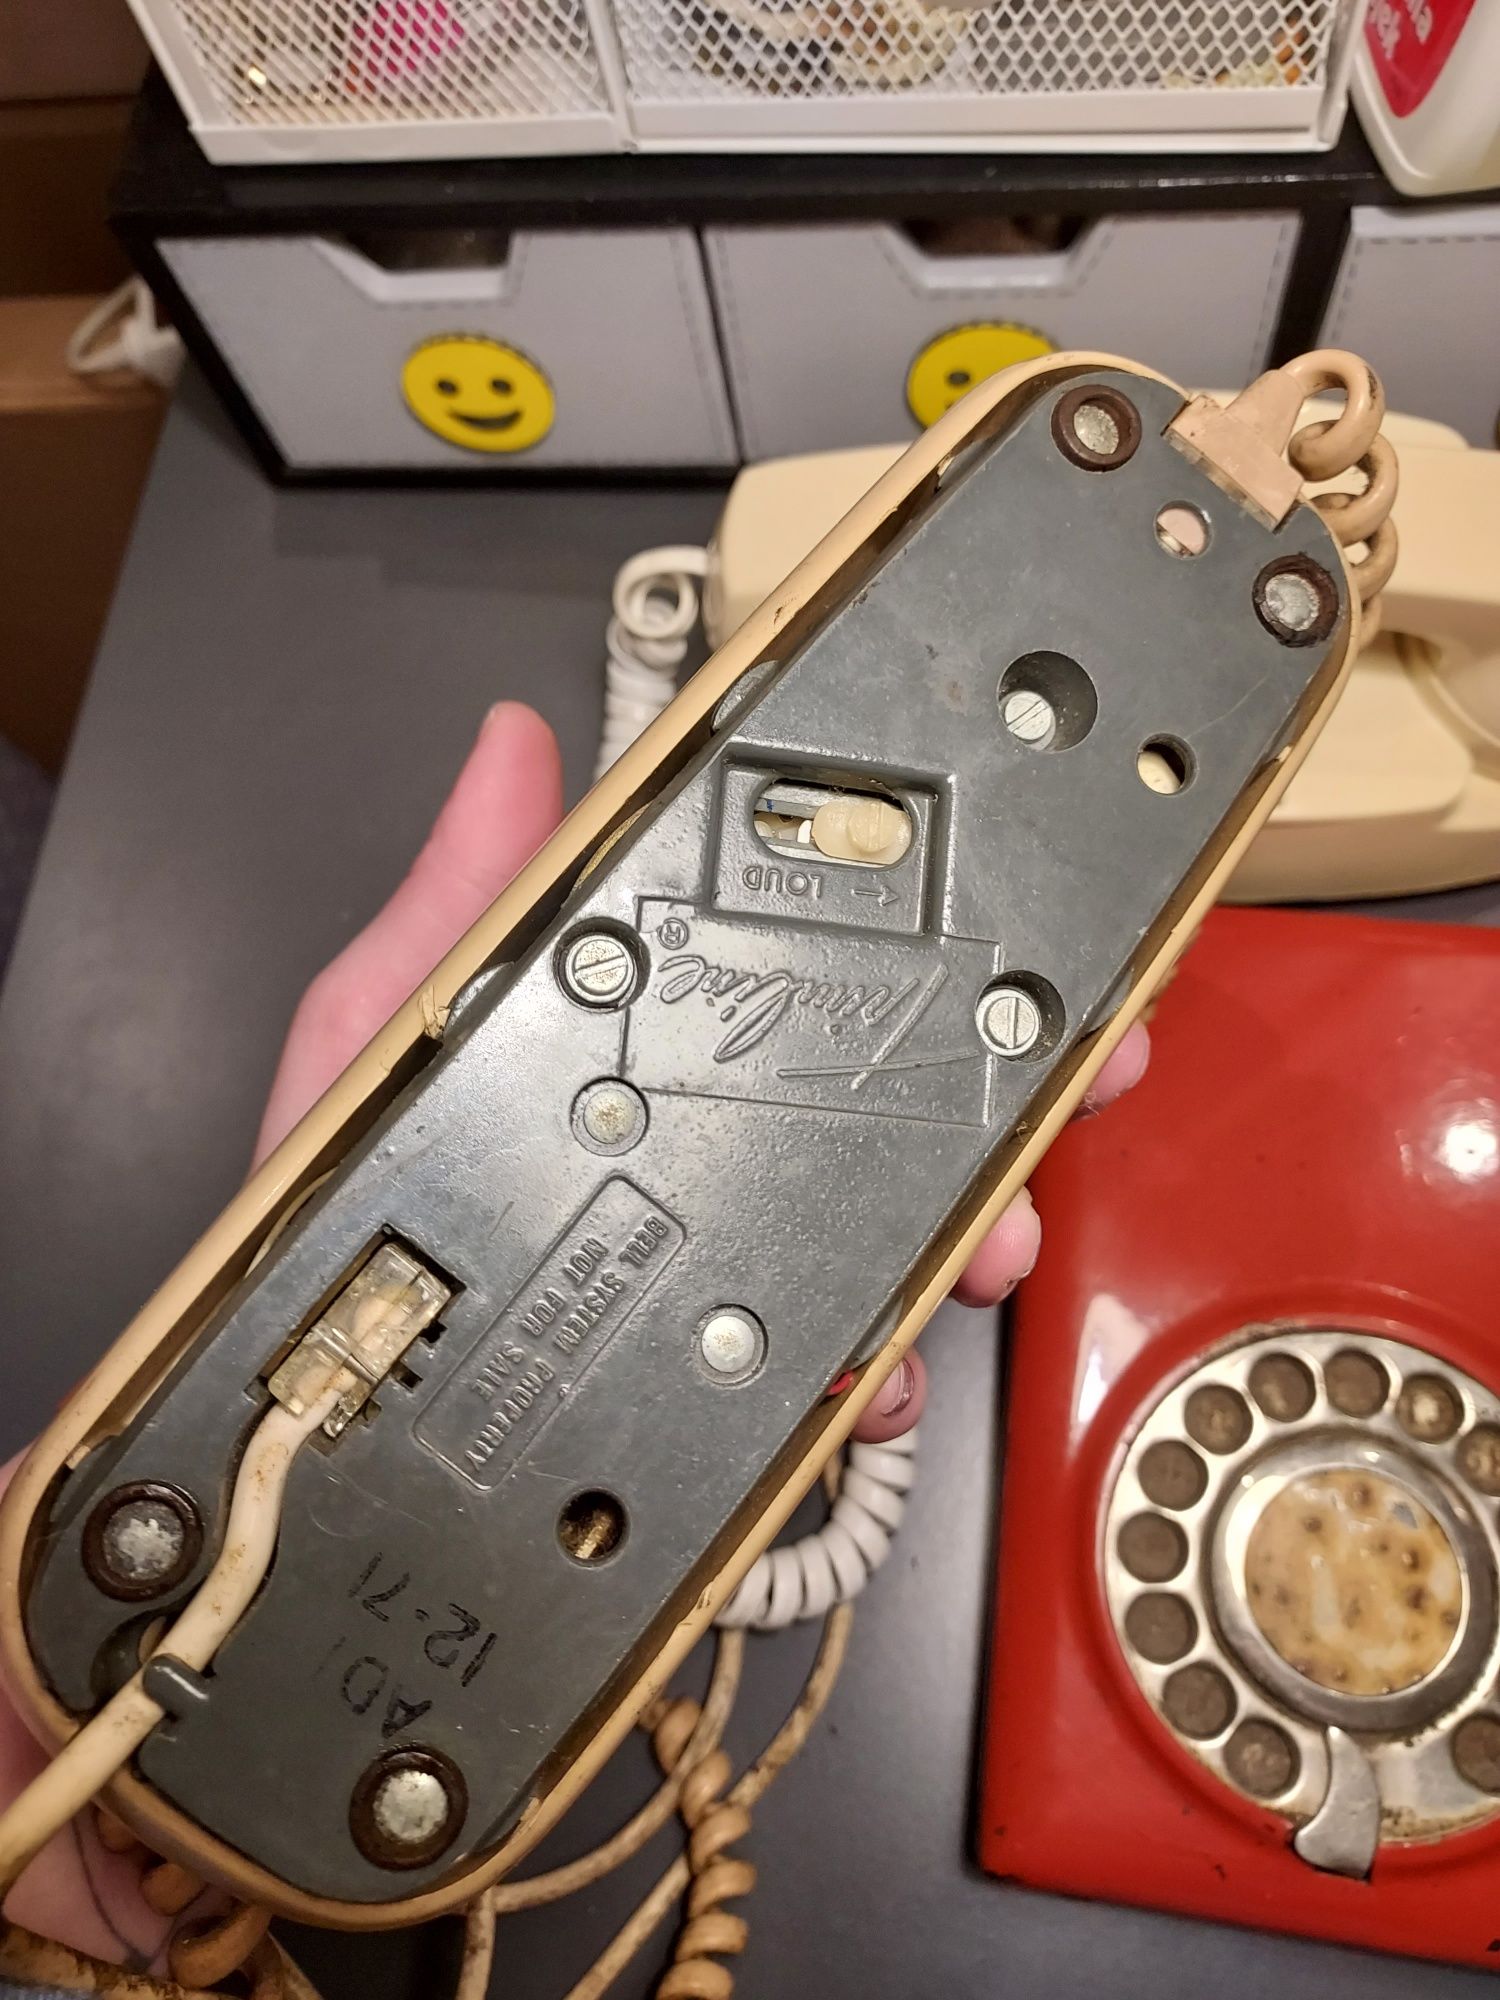 Stary telefon 2 szt zestaw notes telefoniczny PRL